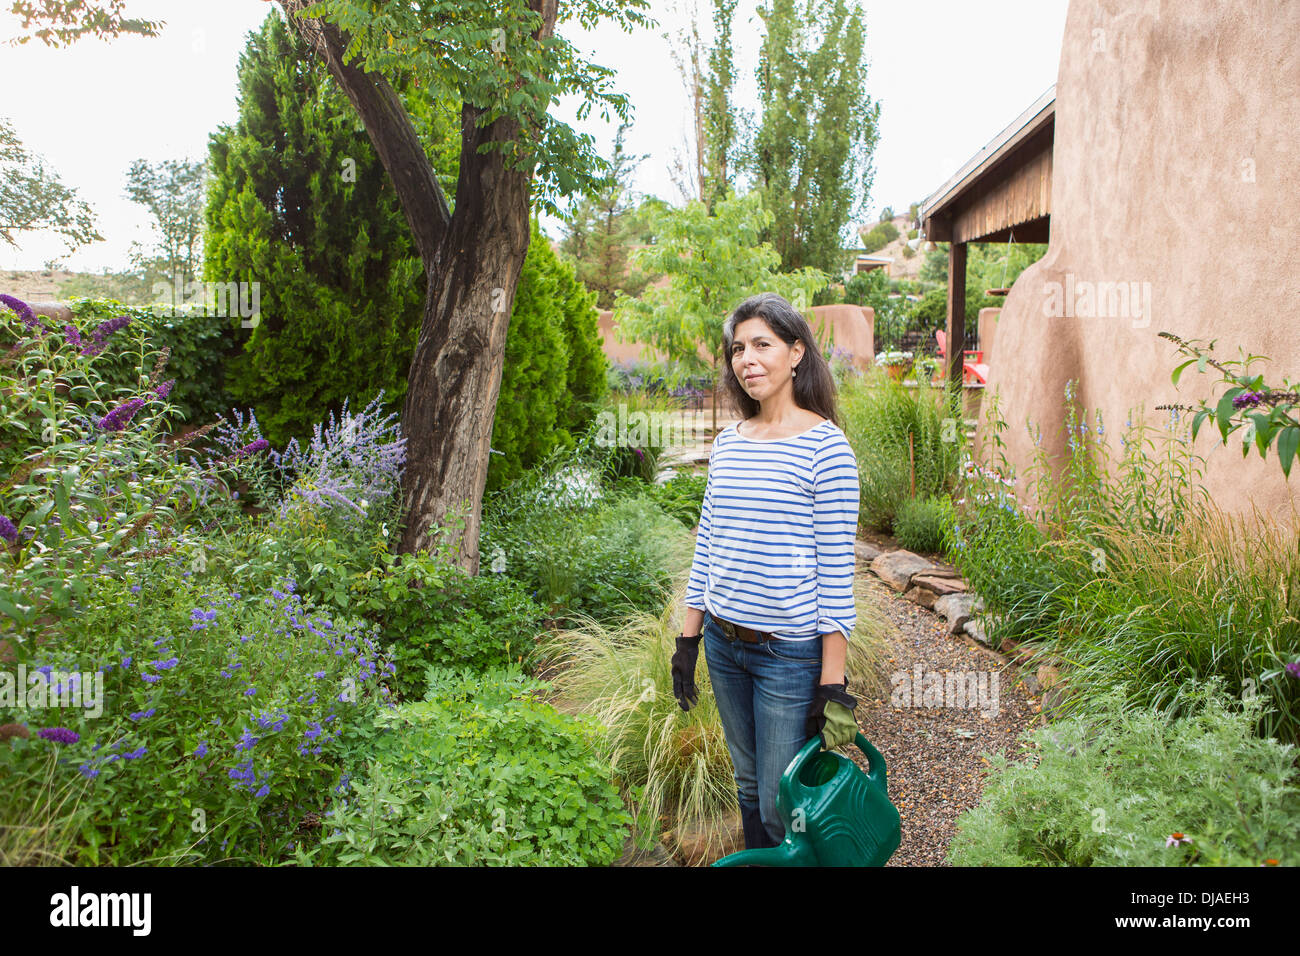 Hispanic woman watering flowers in garden Stock Photo